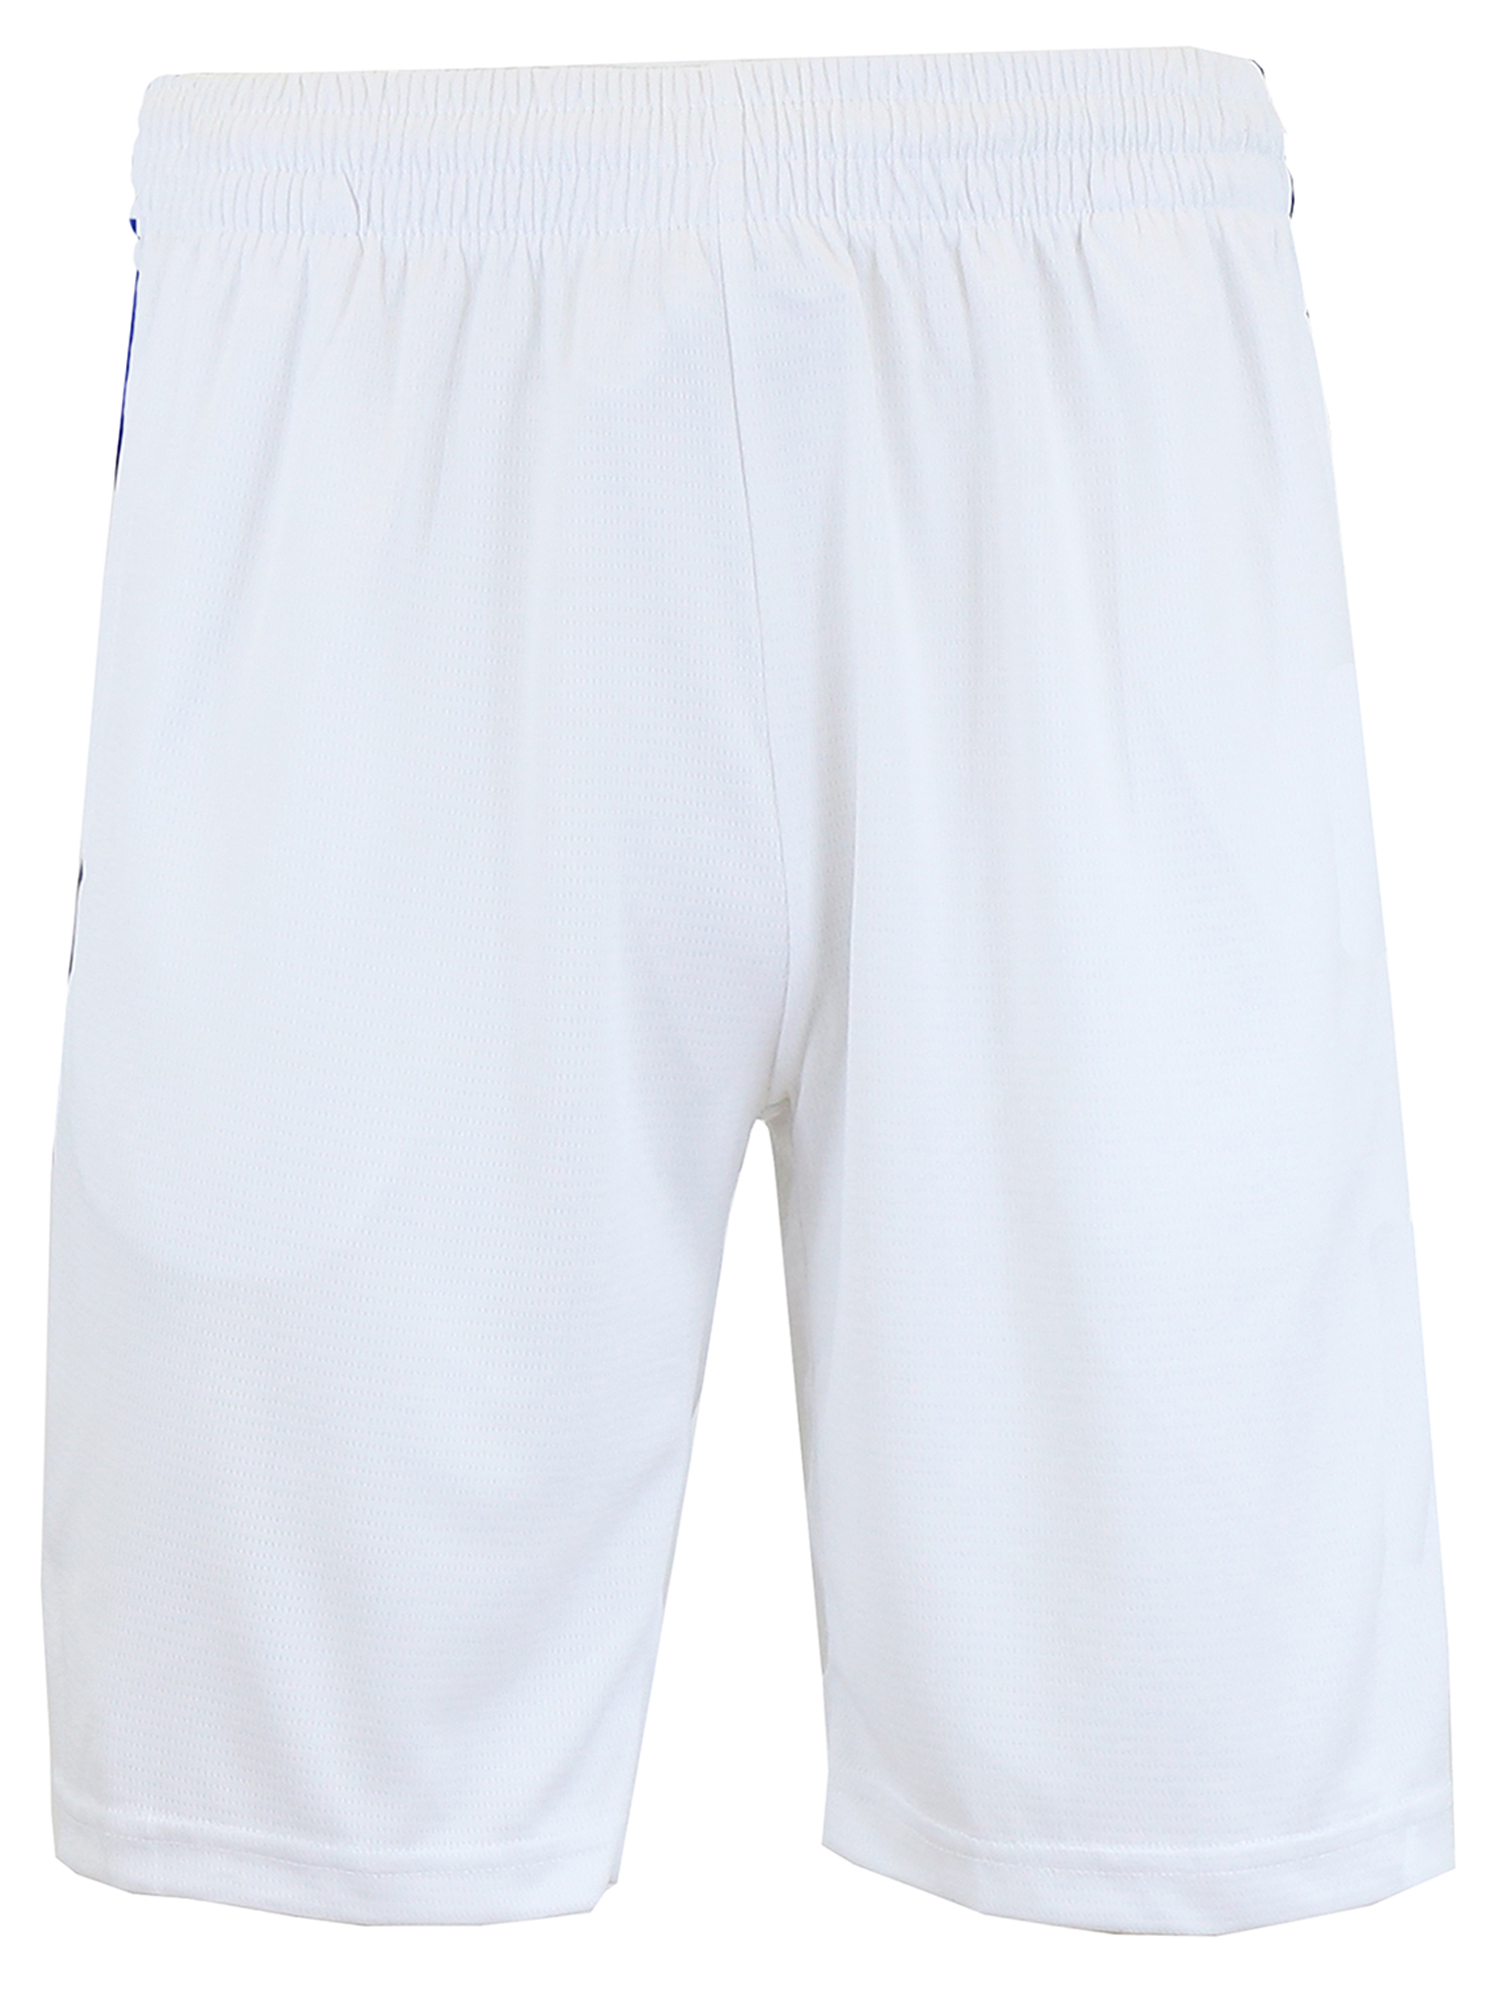 Men's Moisture-Wicking Active Mesh Shorts (S-2XL) - Walmart.com